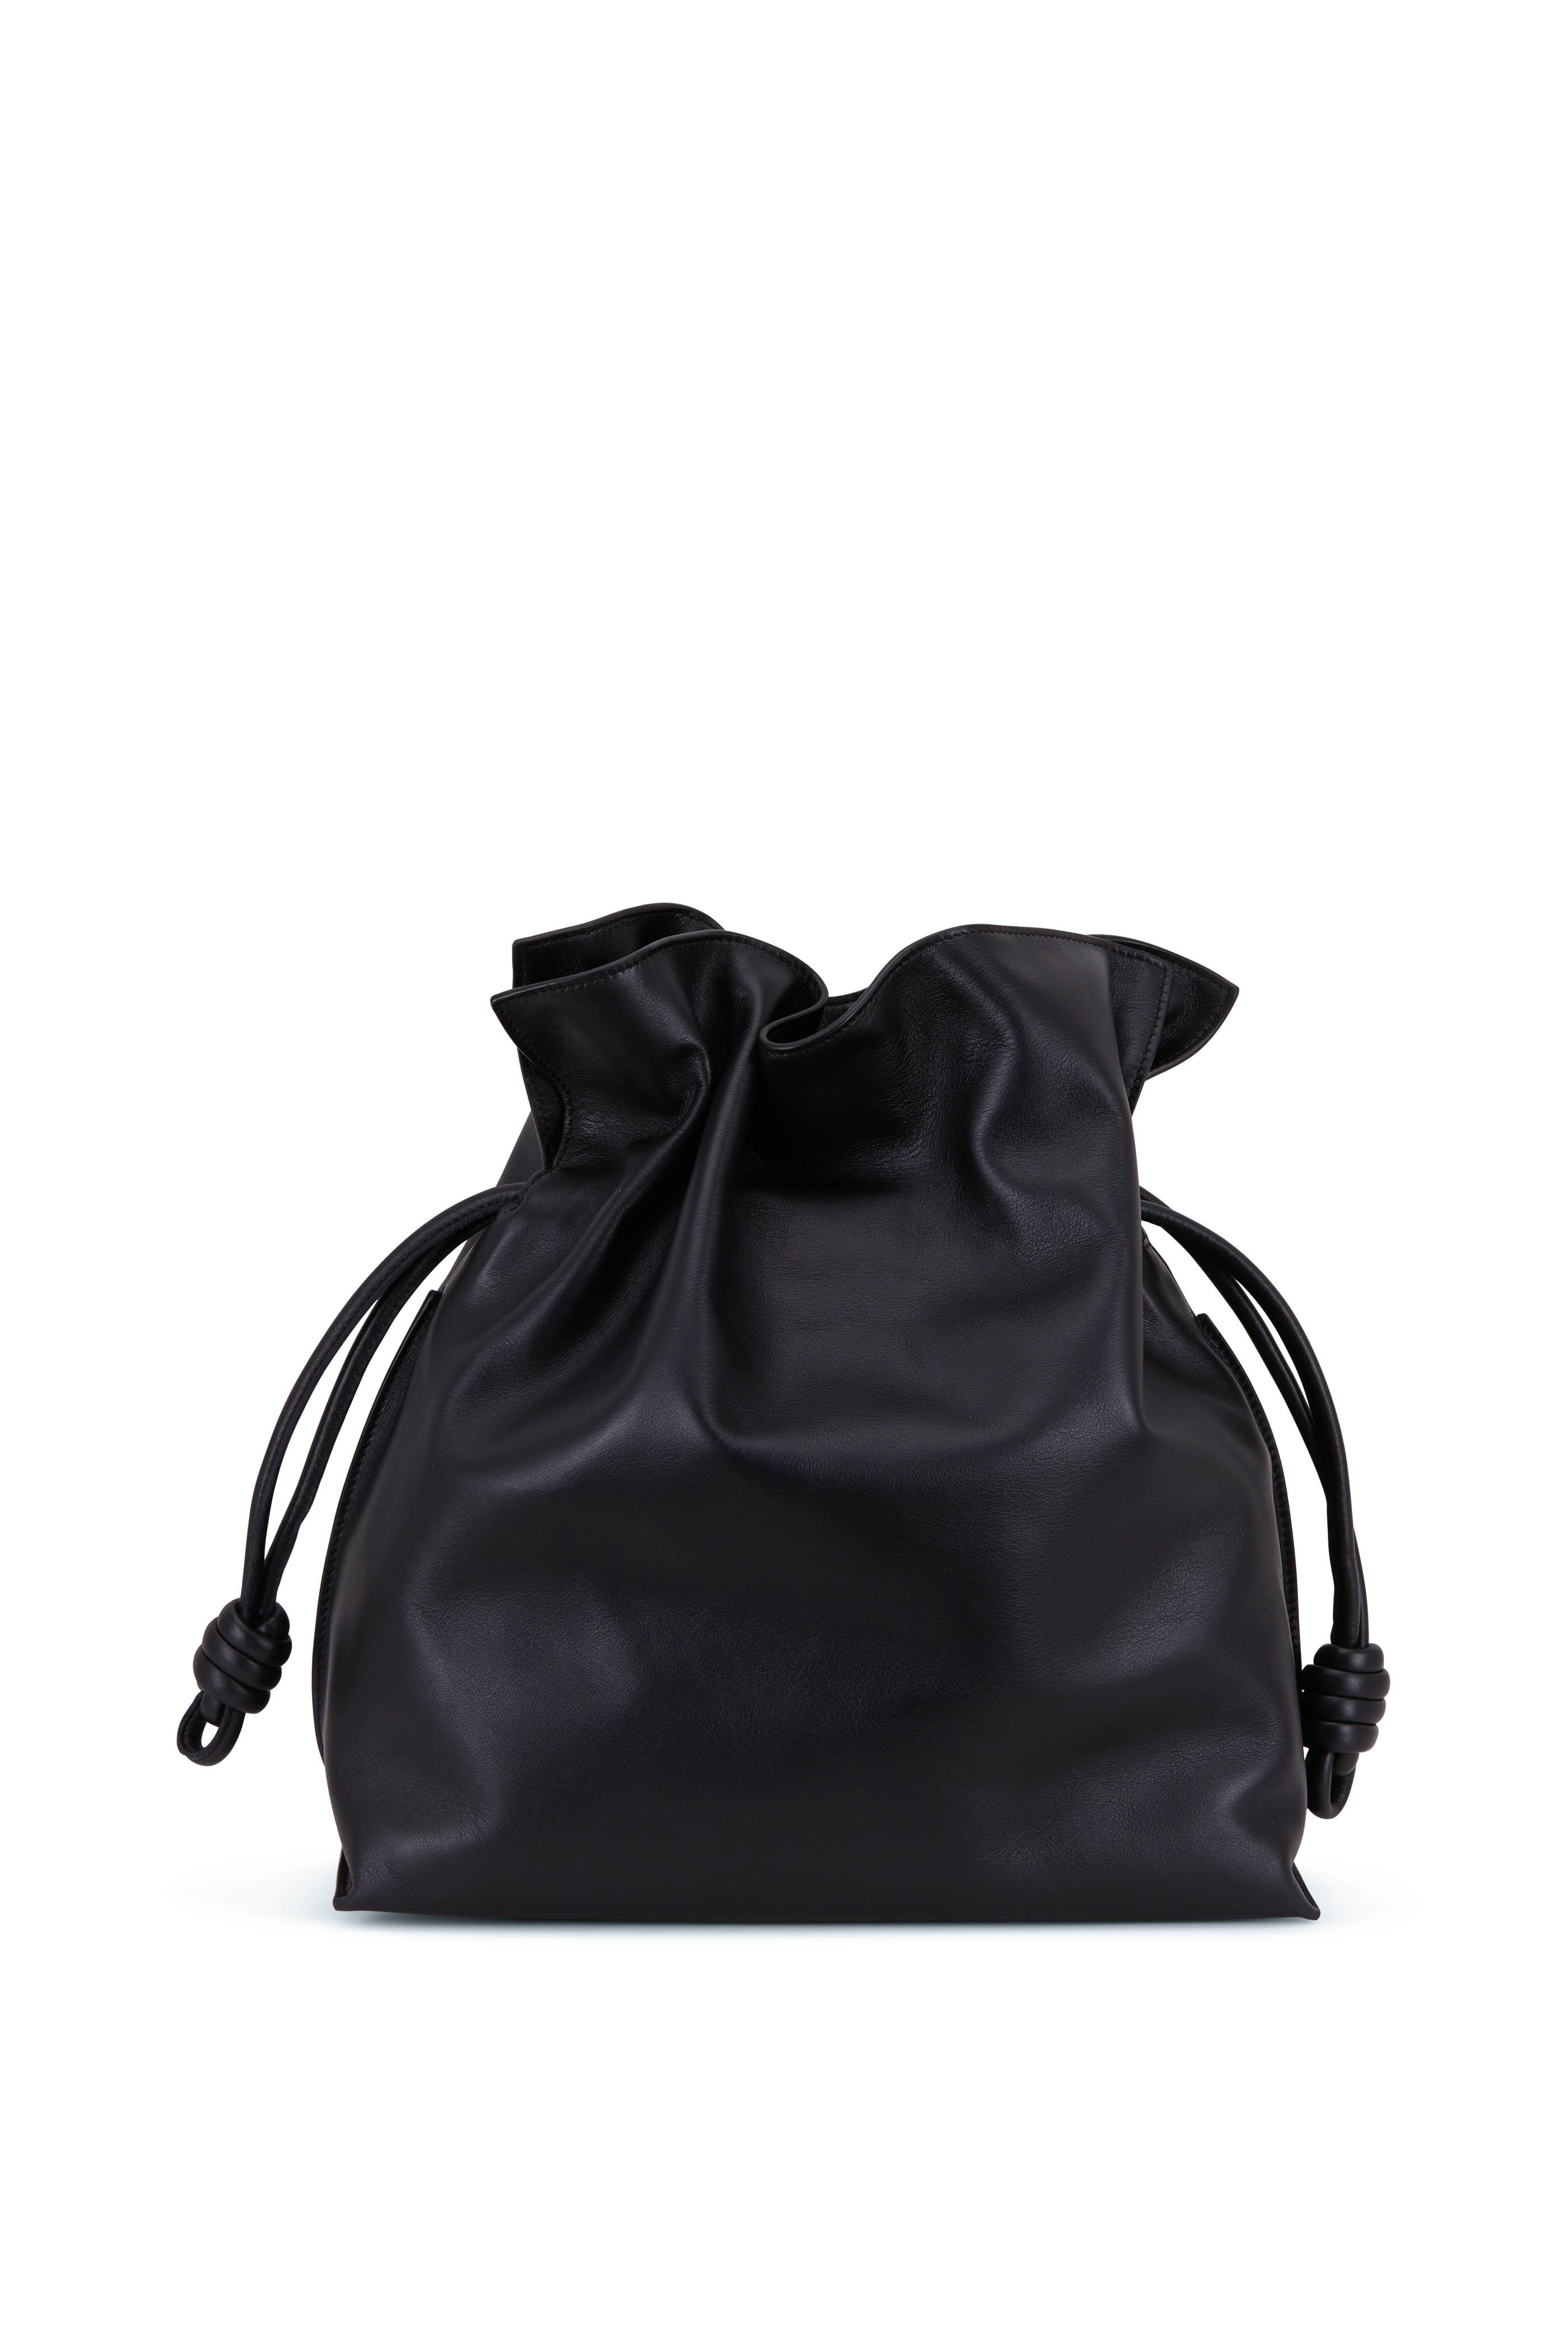 Flamenco Black Leather Large Knot Bag 